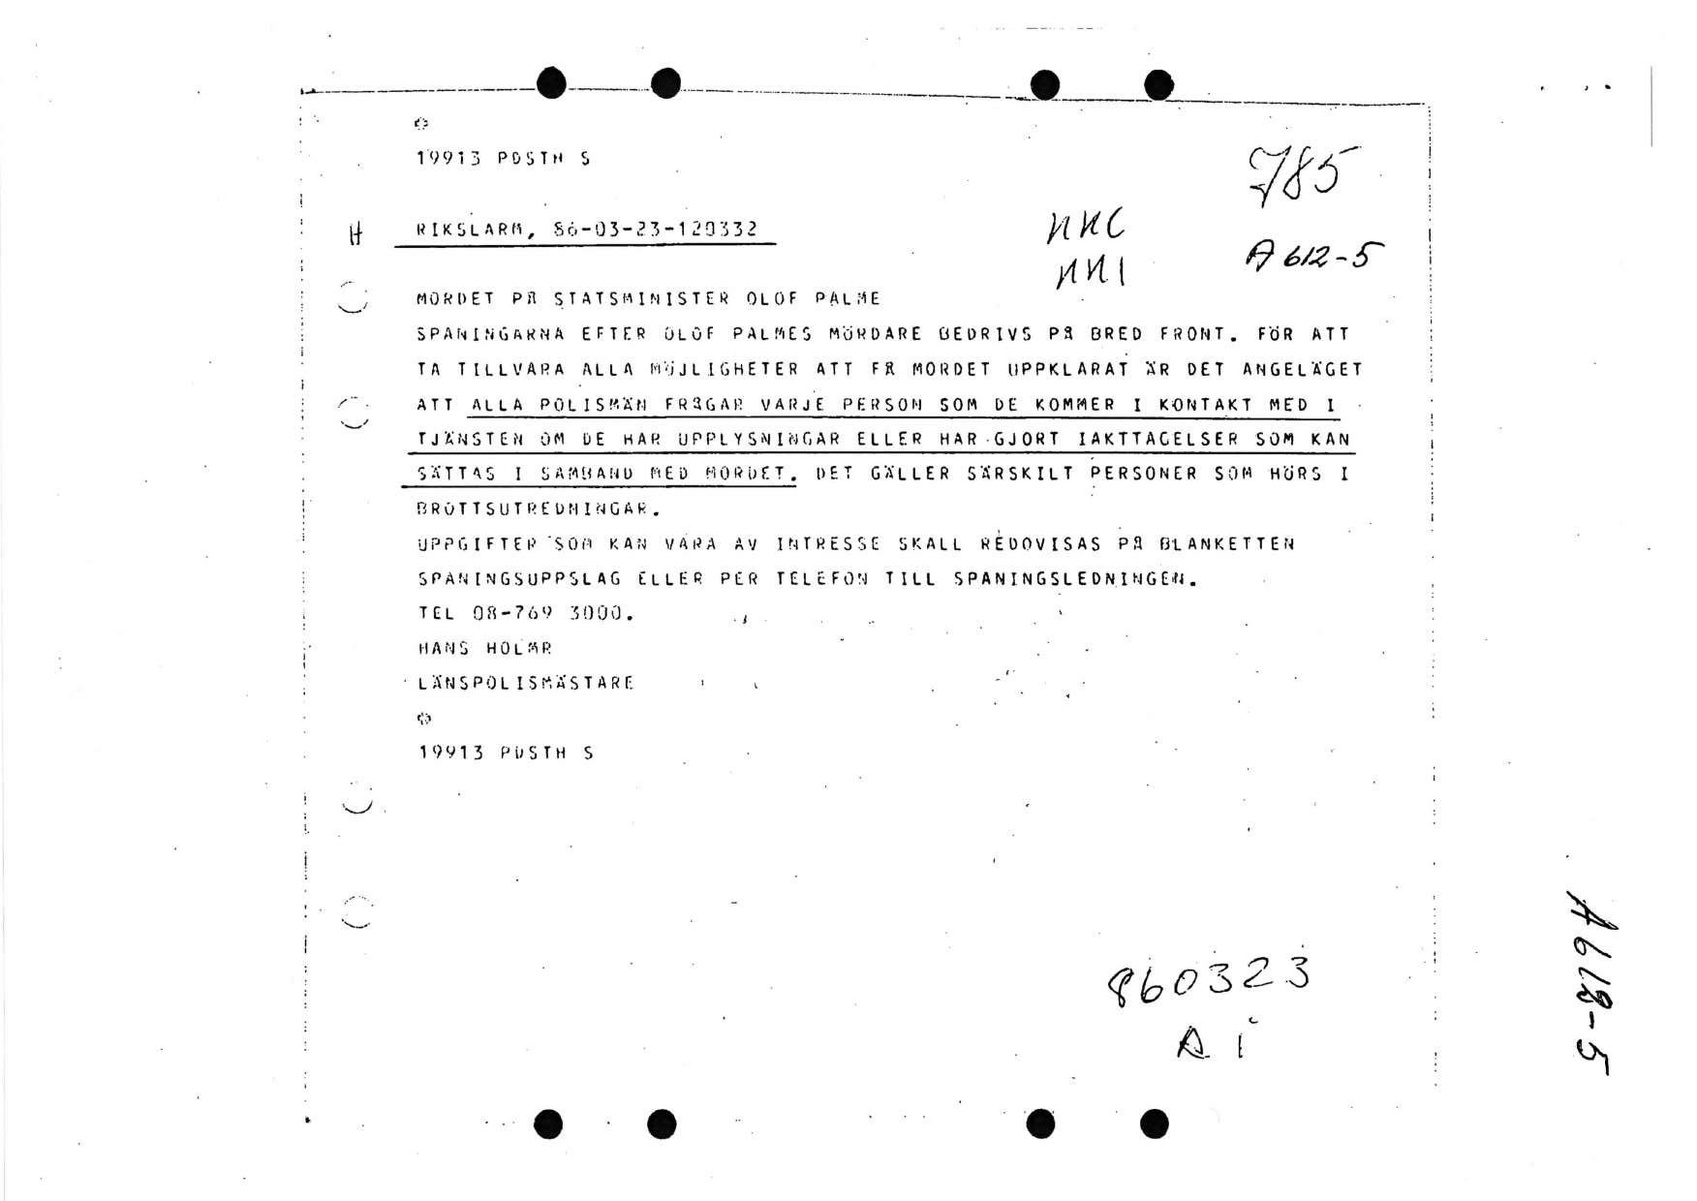 Pol-1986-03-23 1203 A612-05 Rikslarm Mordet på Olof Palme.pdf